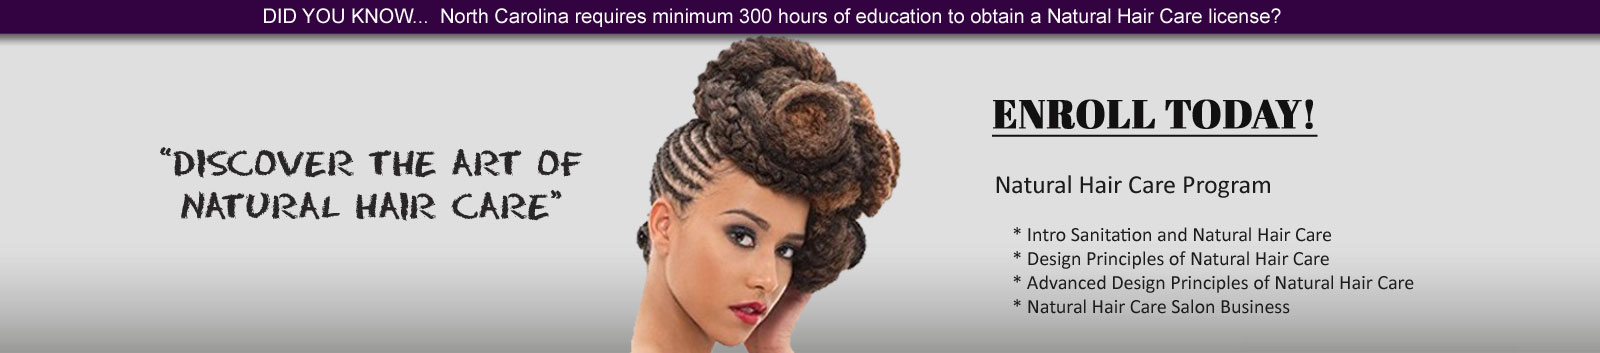 Beauty Schools North Carolina, Natural Hair Care Program